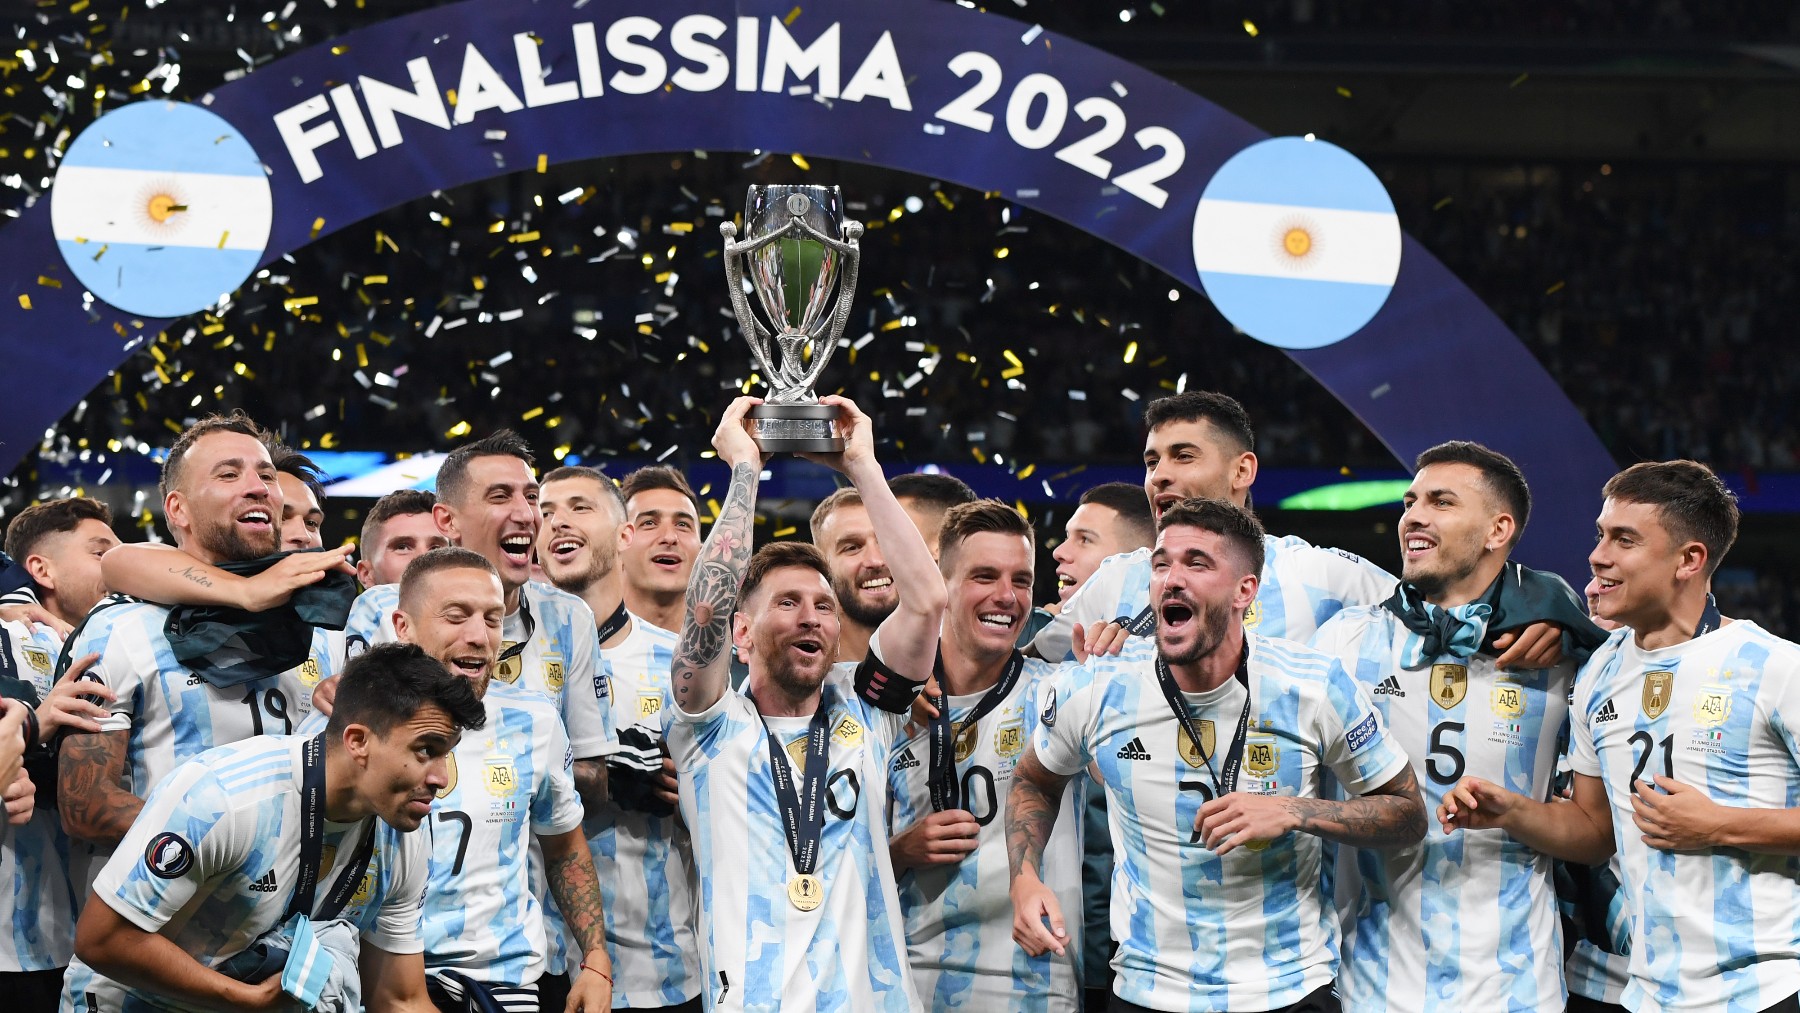 Messi levanta el trofeo de la Finalissima. (Getty)